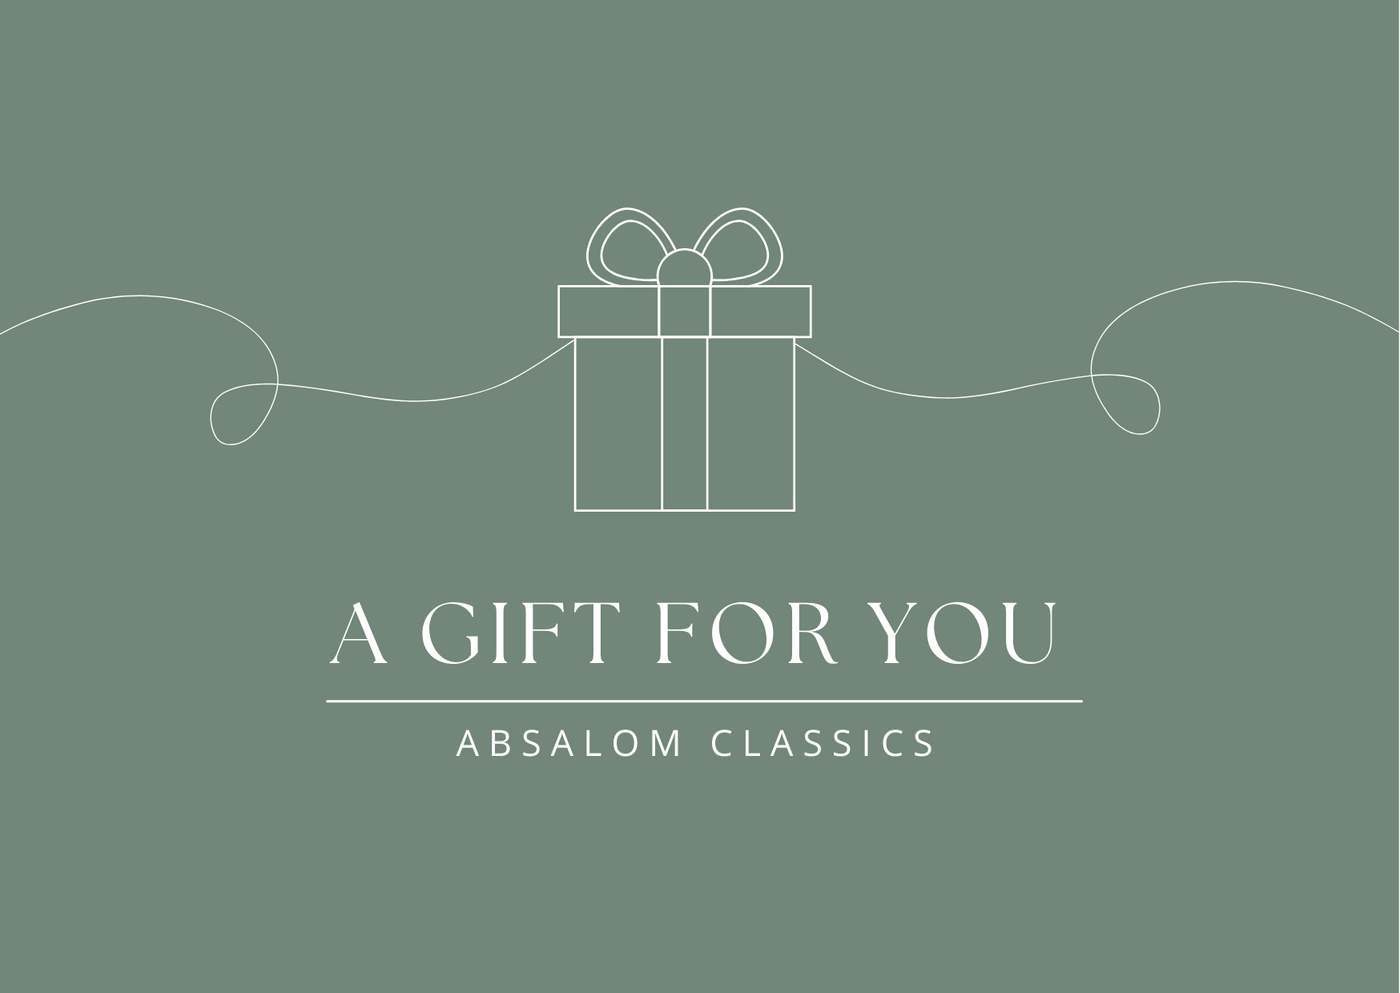 Absalom Classics Gift Card